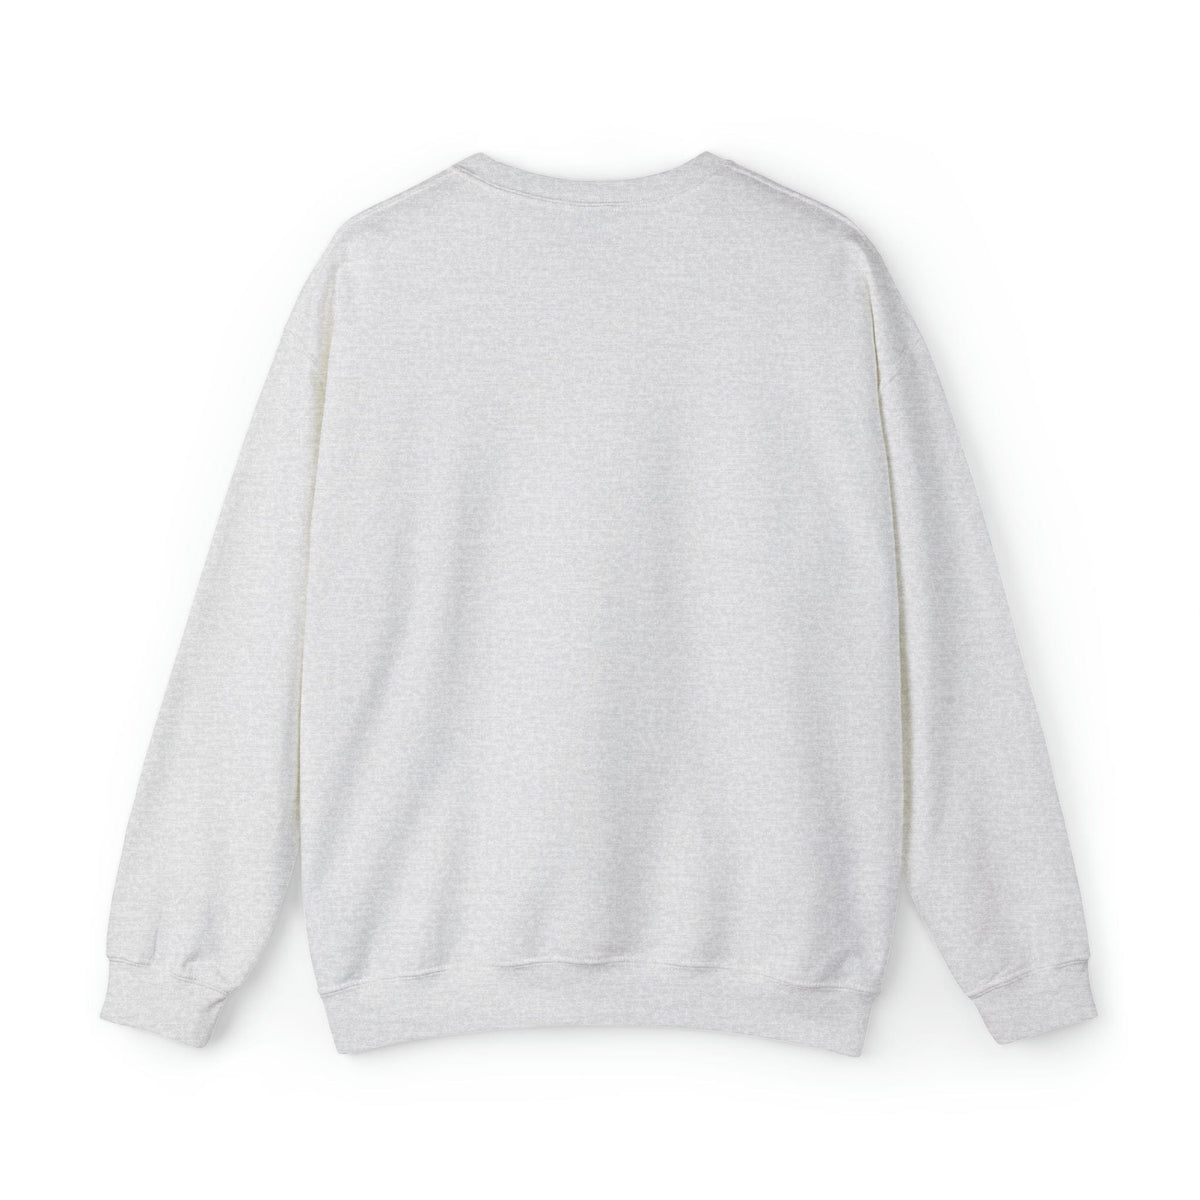 Space Cowgirl Sweatshirt by Haute Sheet | Western Sweatshirt Sweatshirt TheFringeCultureCollective